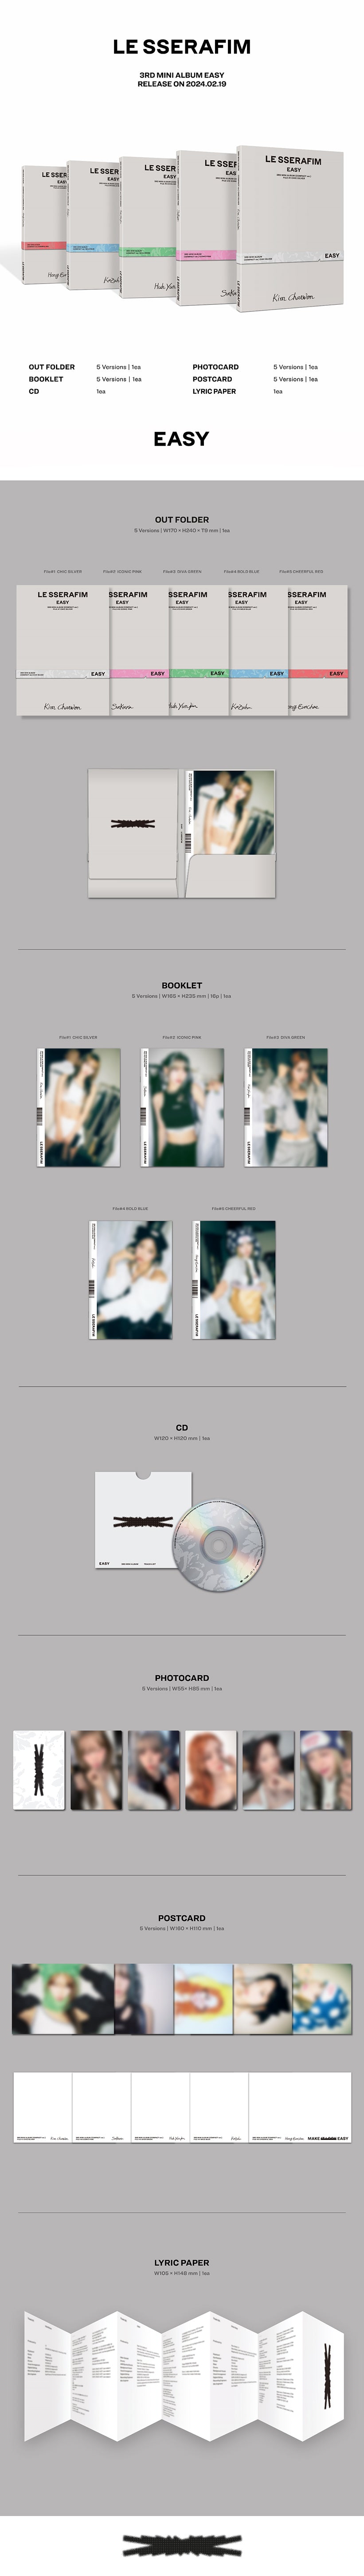 LE SSERAFIM - 3rd Mini Album EASY (COMPACT Ver.)